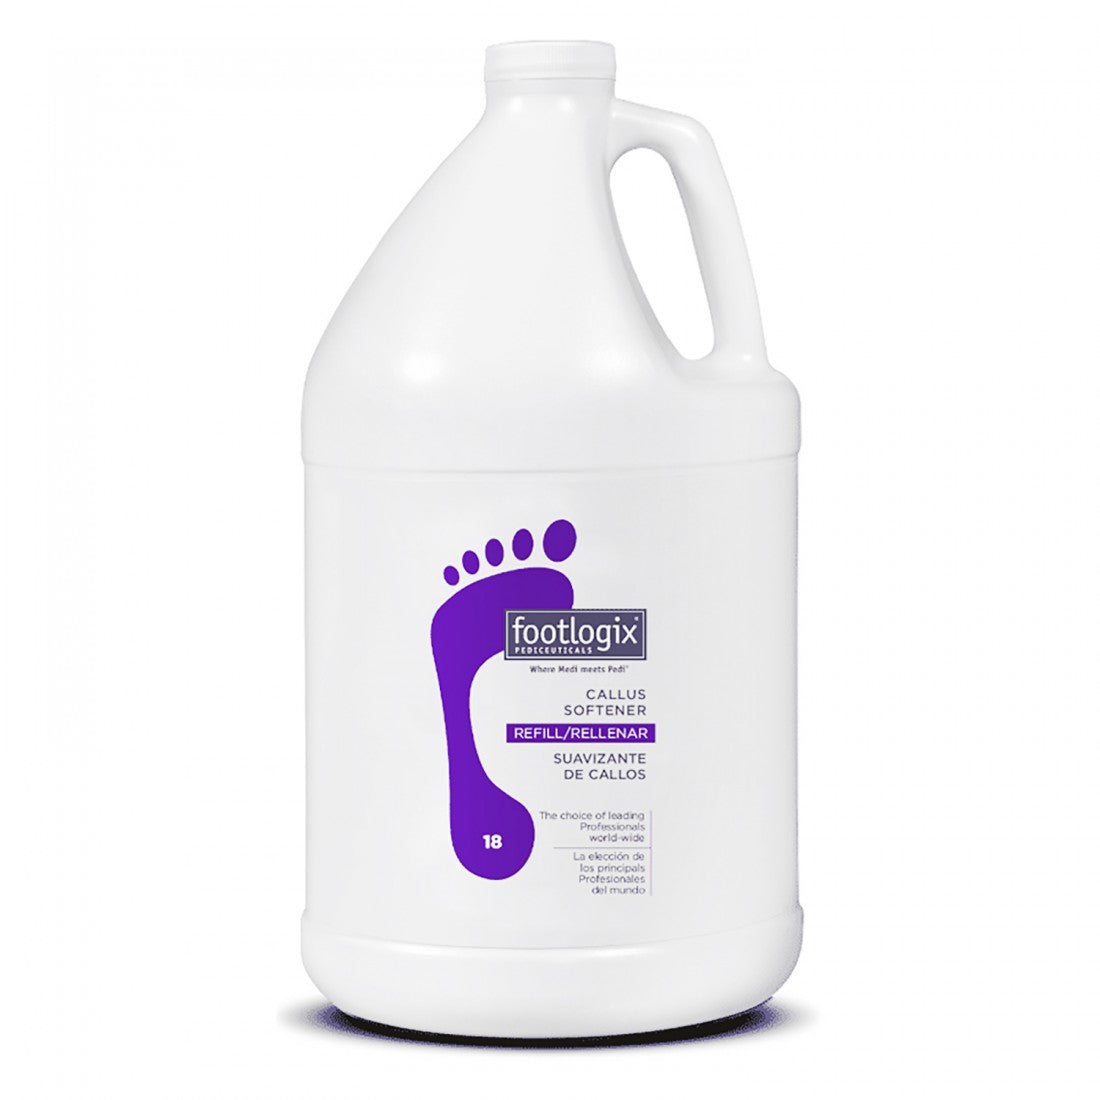 Footlogix | Professional callus softener - professional size